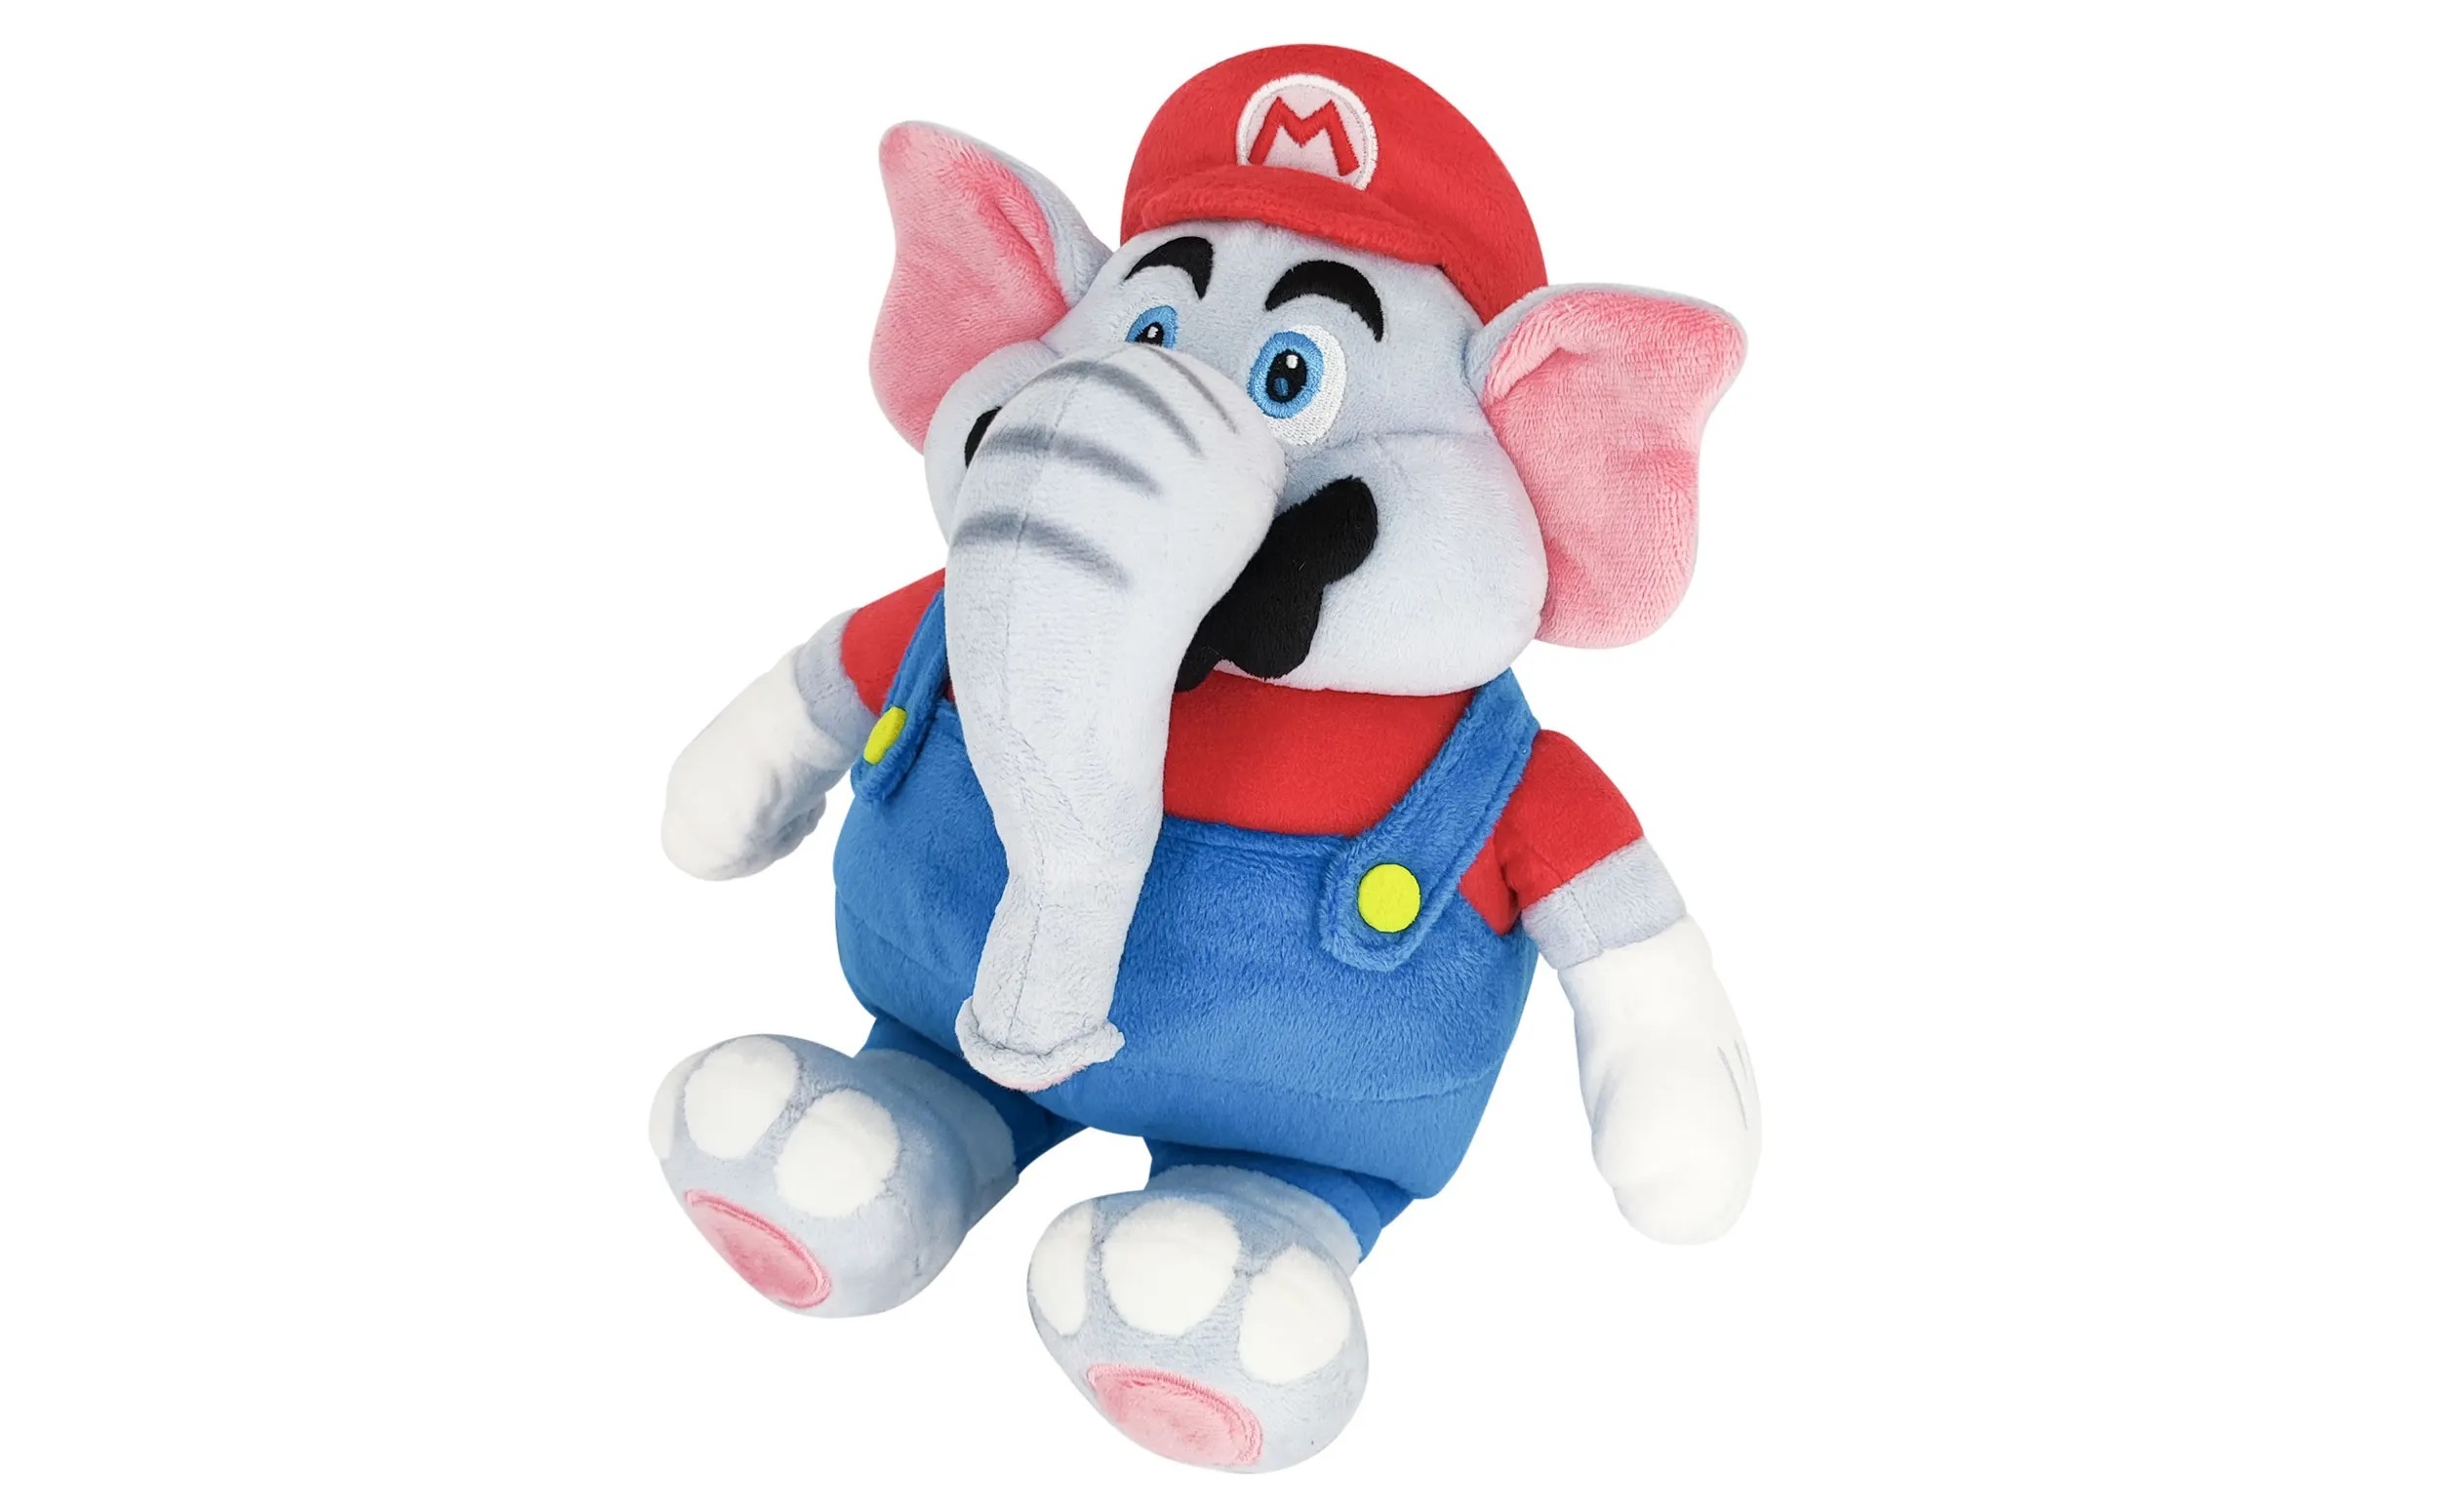 Super Mario Bros. Wonder Elephant Mario plush pre-orders open